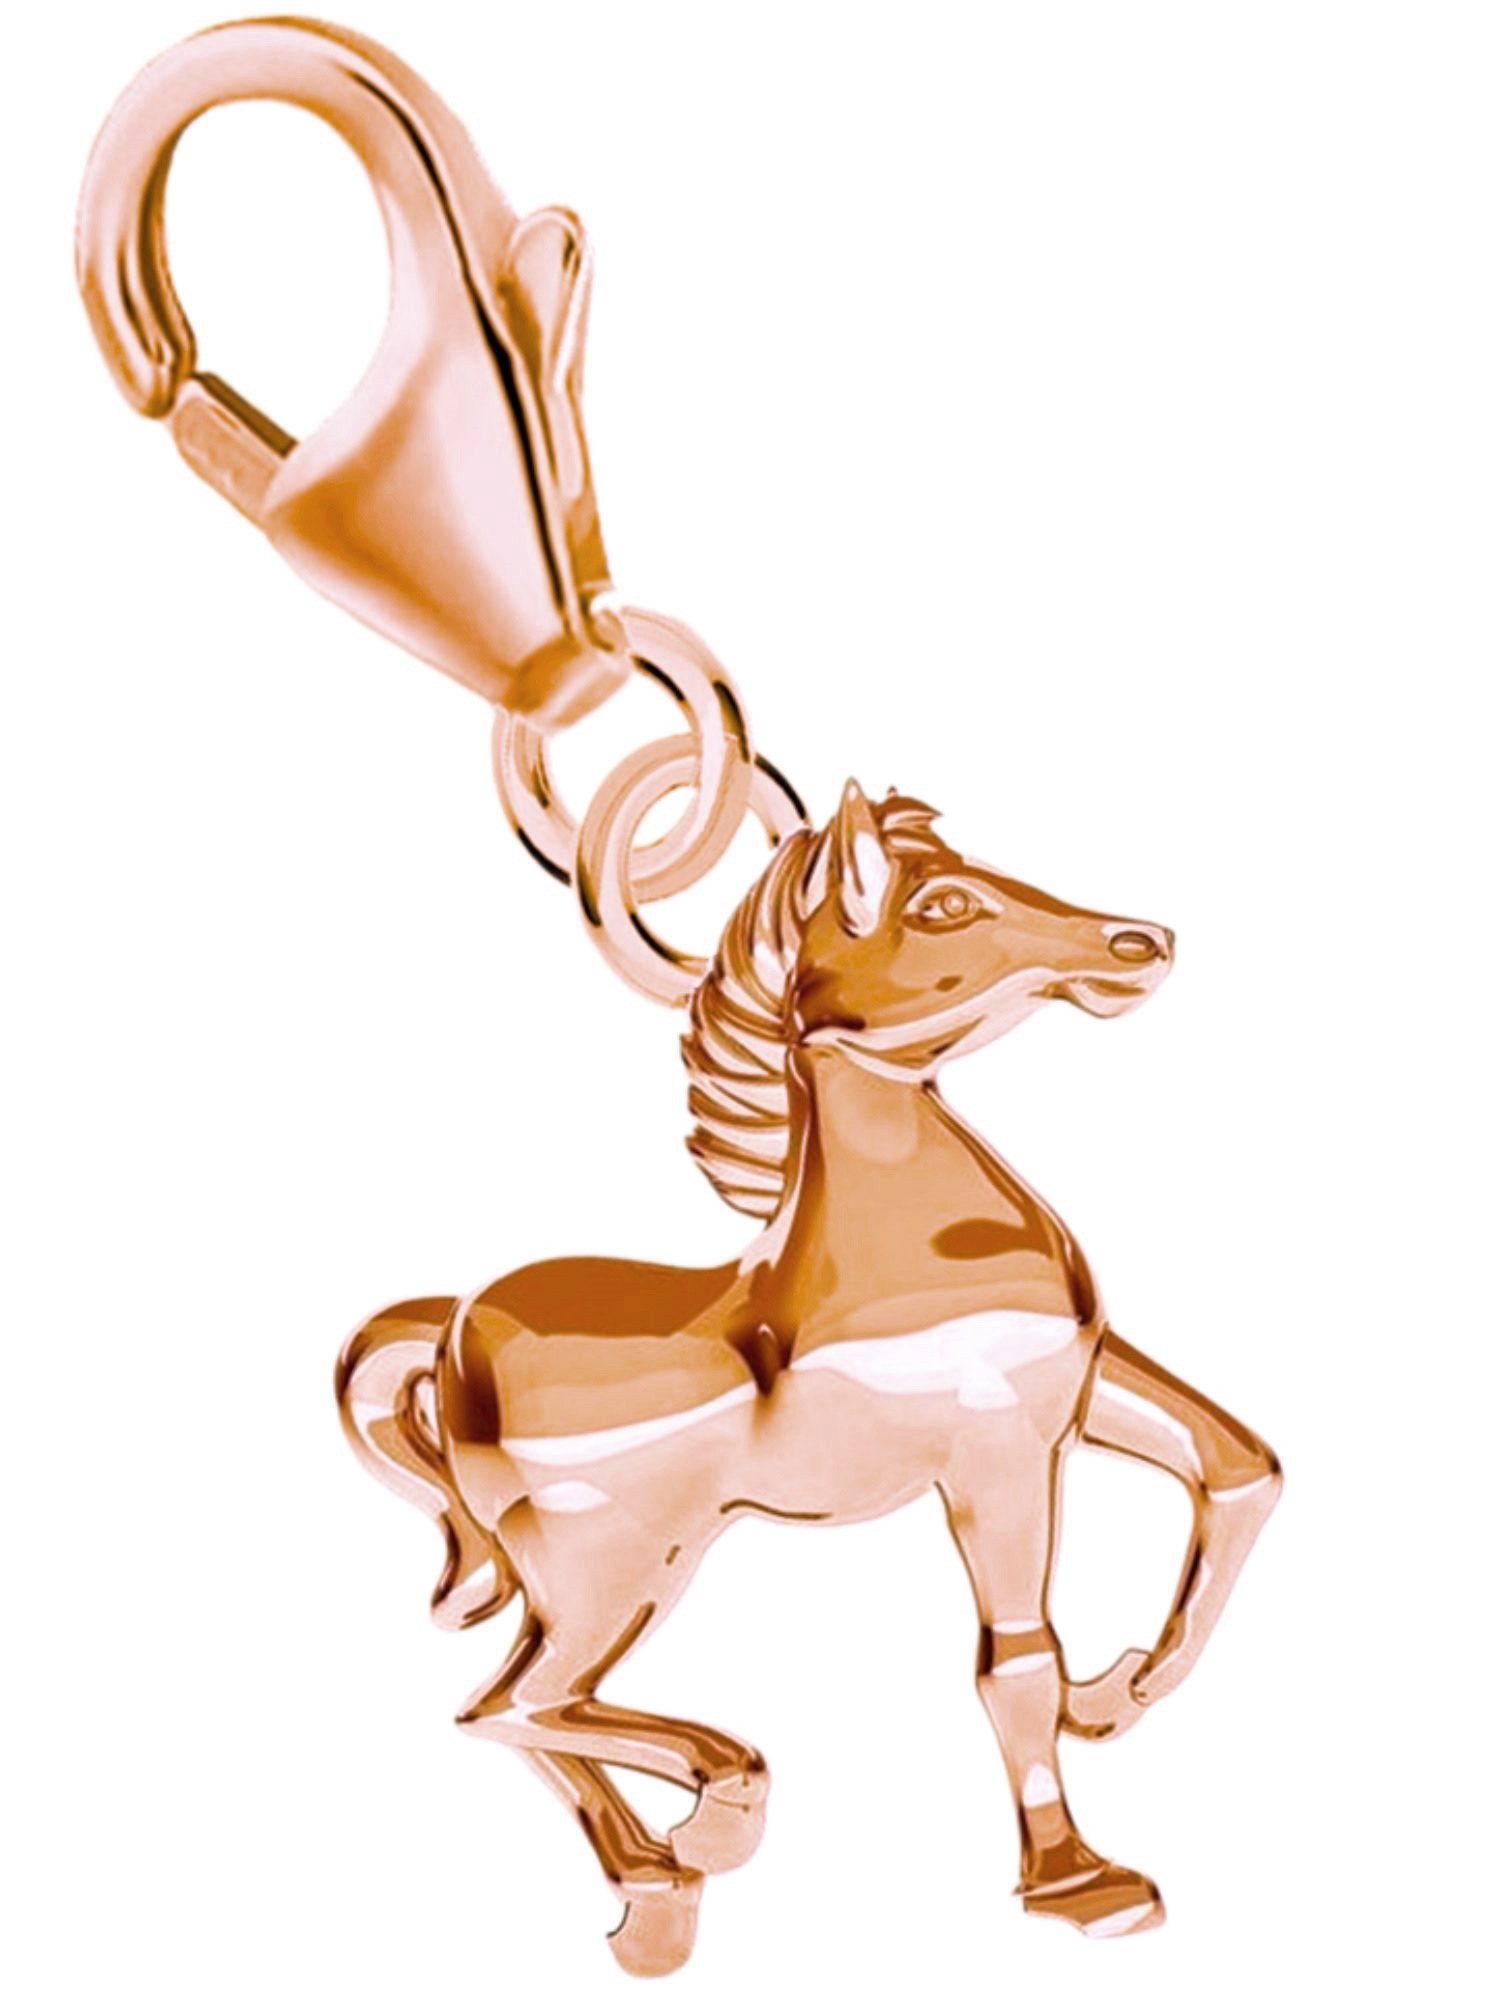 Goldene Hufeisen Charm-Einhänger Pferd Karabiner Charm Anhänger für Bettelarmband 925 Silber (inkl. Etui)